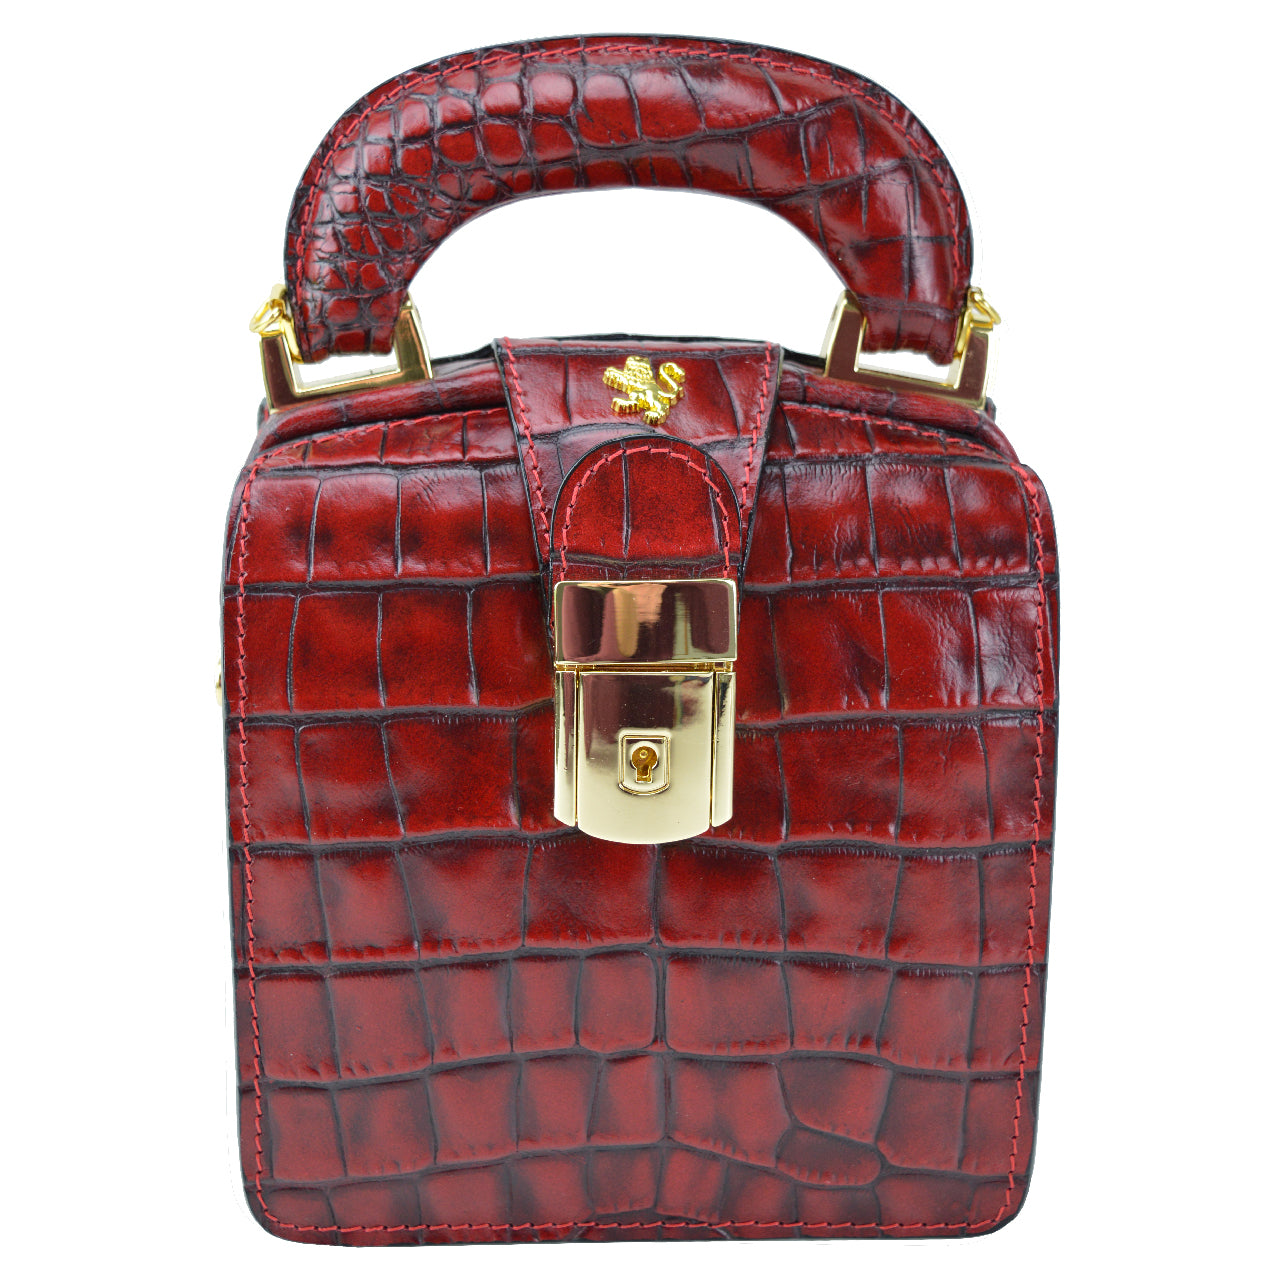 Pratesi Brunelleschi Handbag in genuine Italian leather - Brunelleschi Cherry